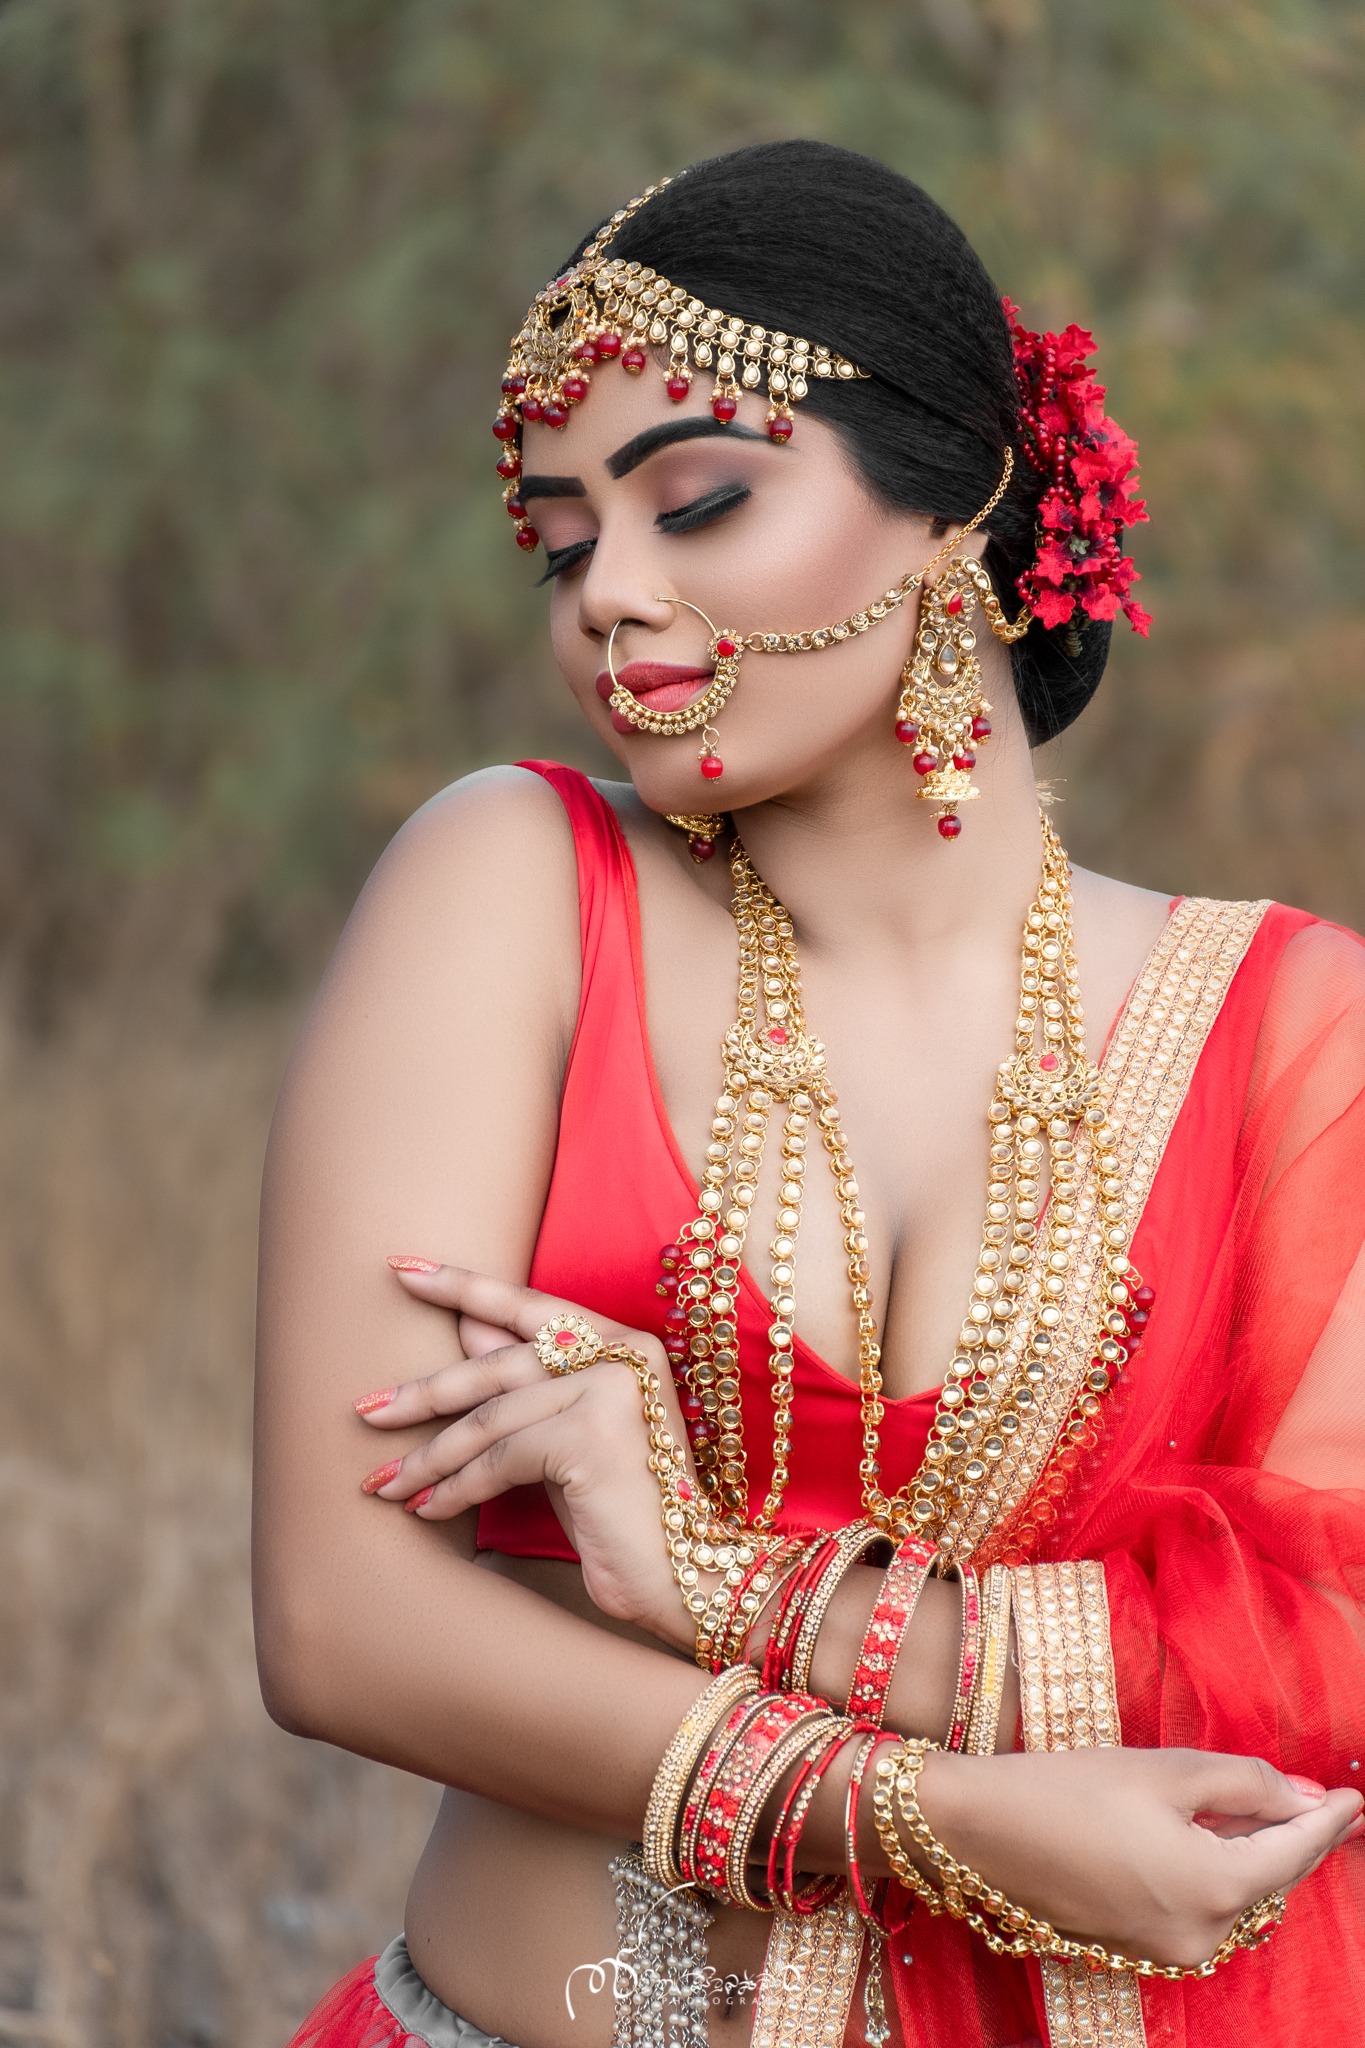 Sri Lankan Hot model, actress Thili Fernando Indian Bridal Photoshoot on 16PLUSLK.COM.  Janitha Situbandara Photography. Thili Fernando hot photos, videos. Indian Bridal NEW trends.